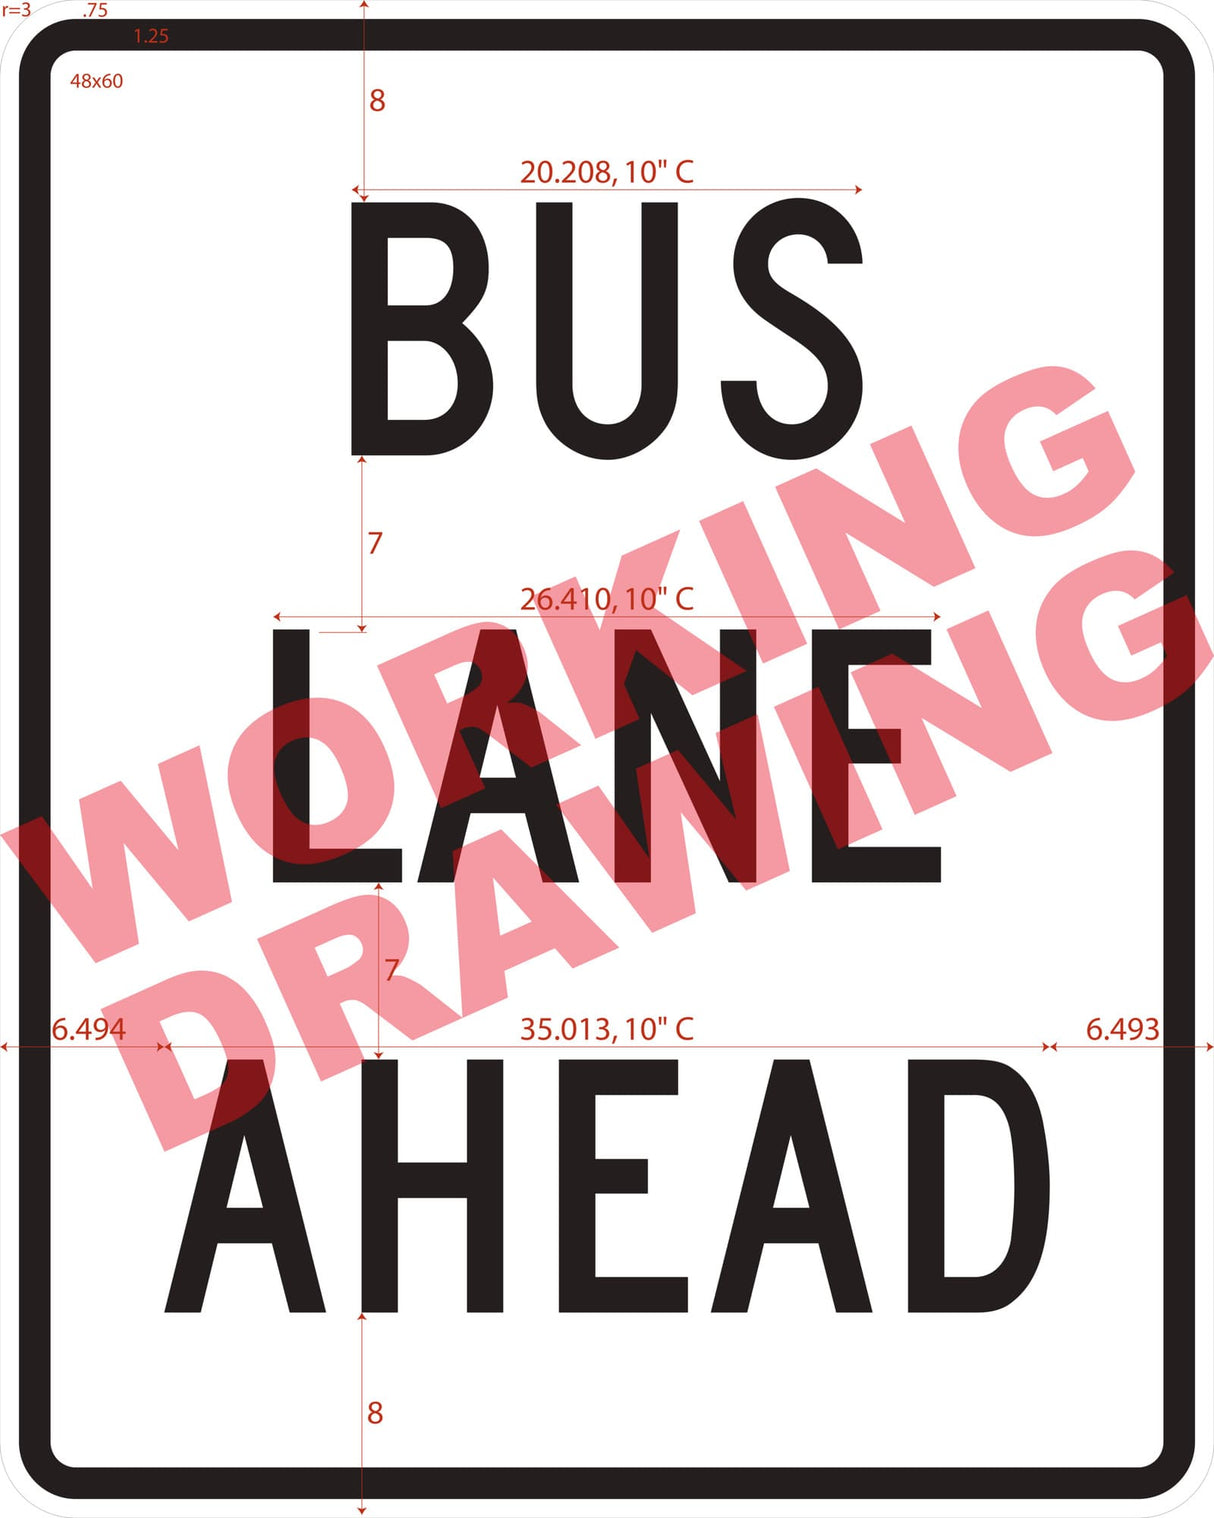 Bus Lane Ahead (Post-Mounted) (R03-12F)